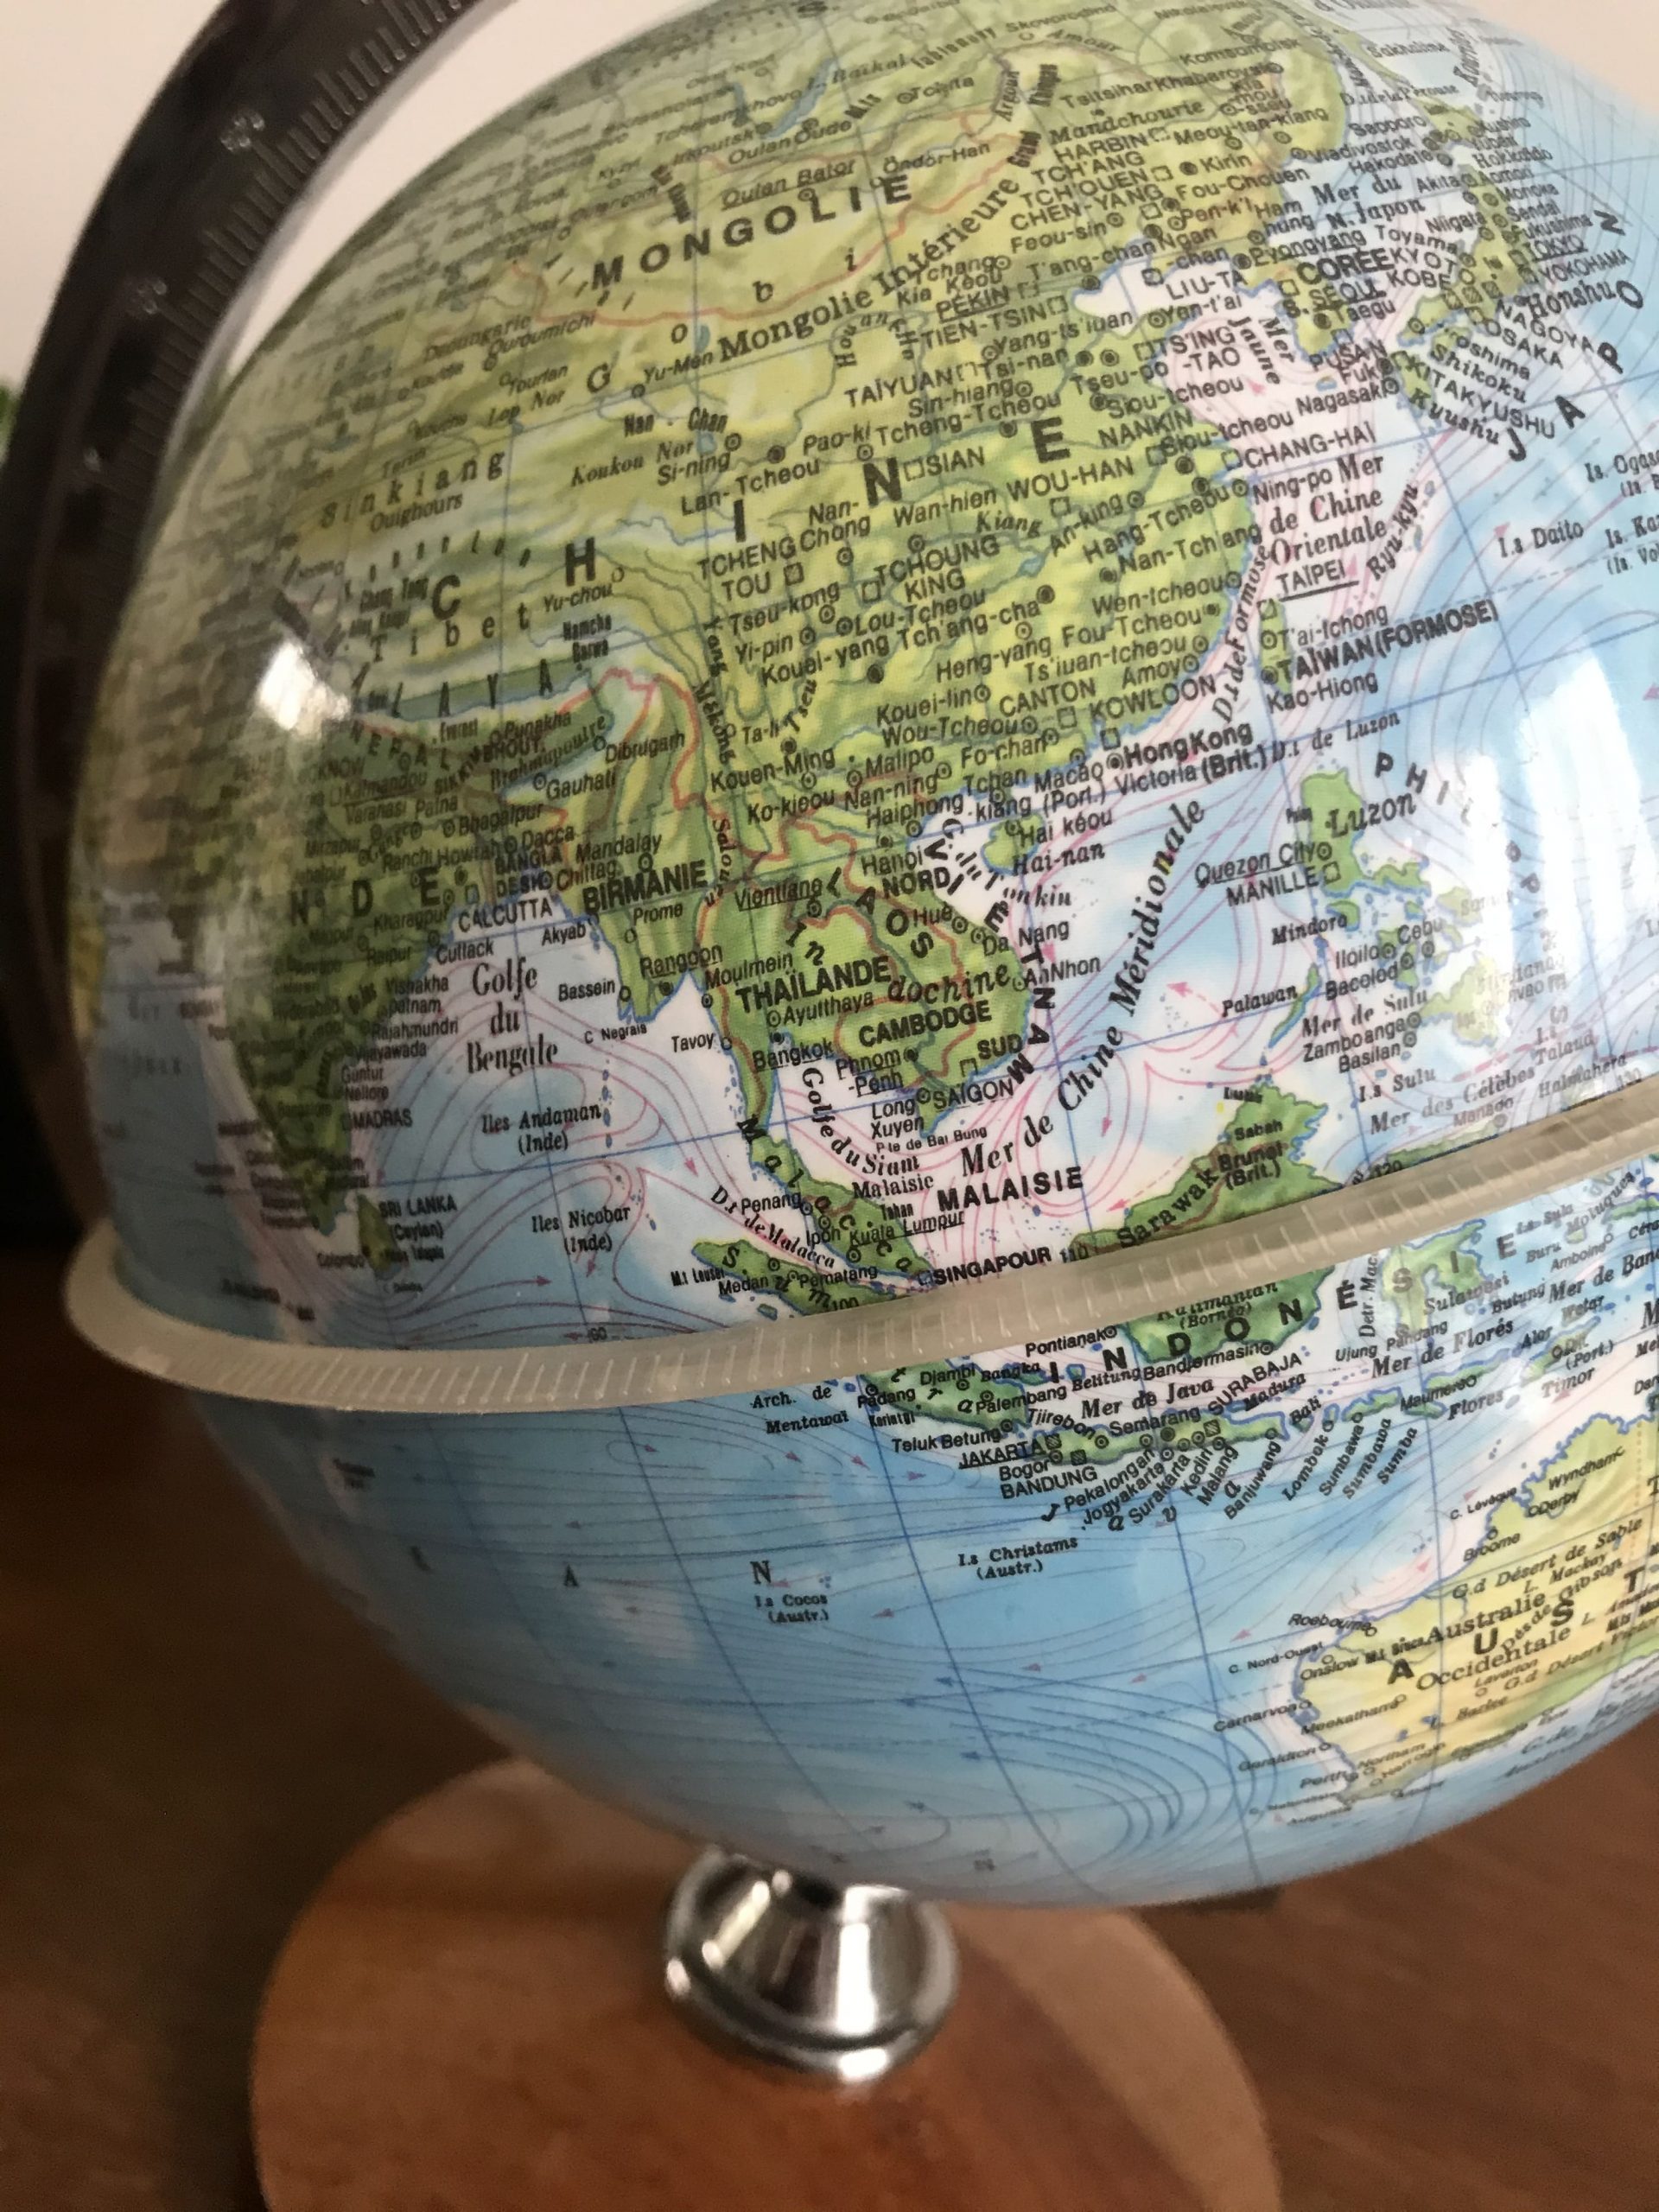 Grand globe terrestre vintage en bois massif –